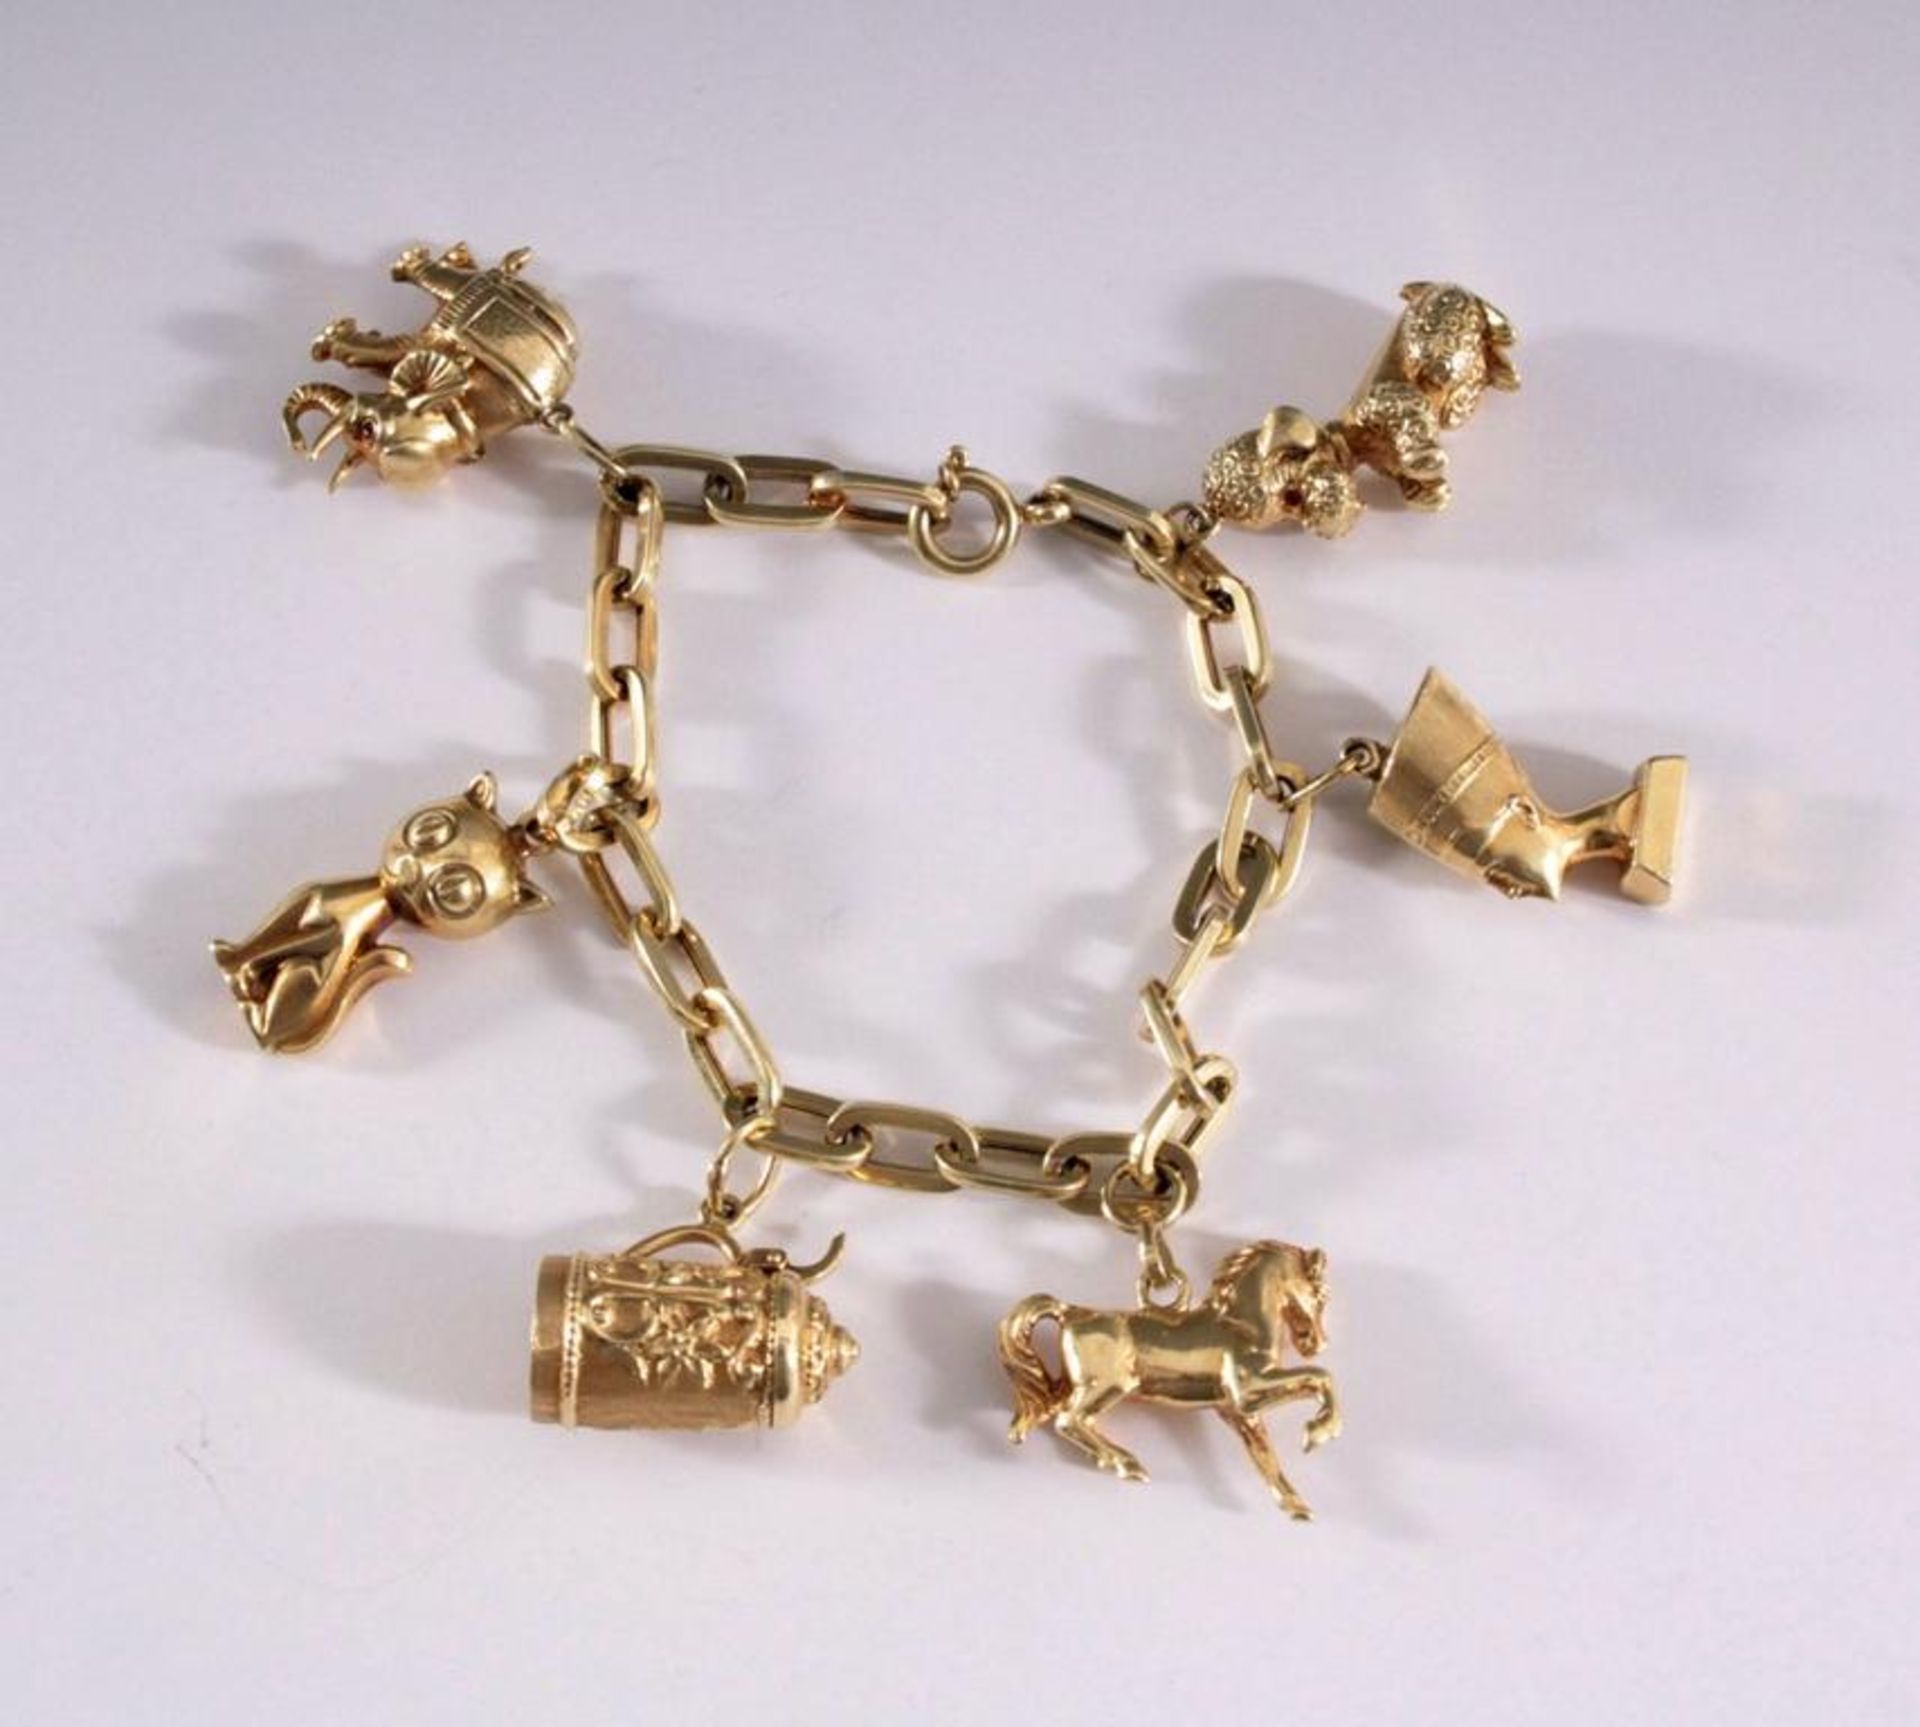 Bettelarmband aus 14 Karat GelbgoldKettenglieder-Armband mit 6 Anhänger u.a. Pudel, Elefant,